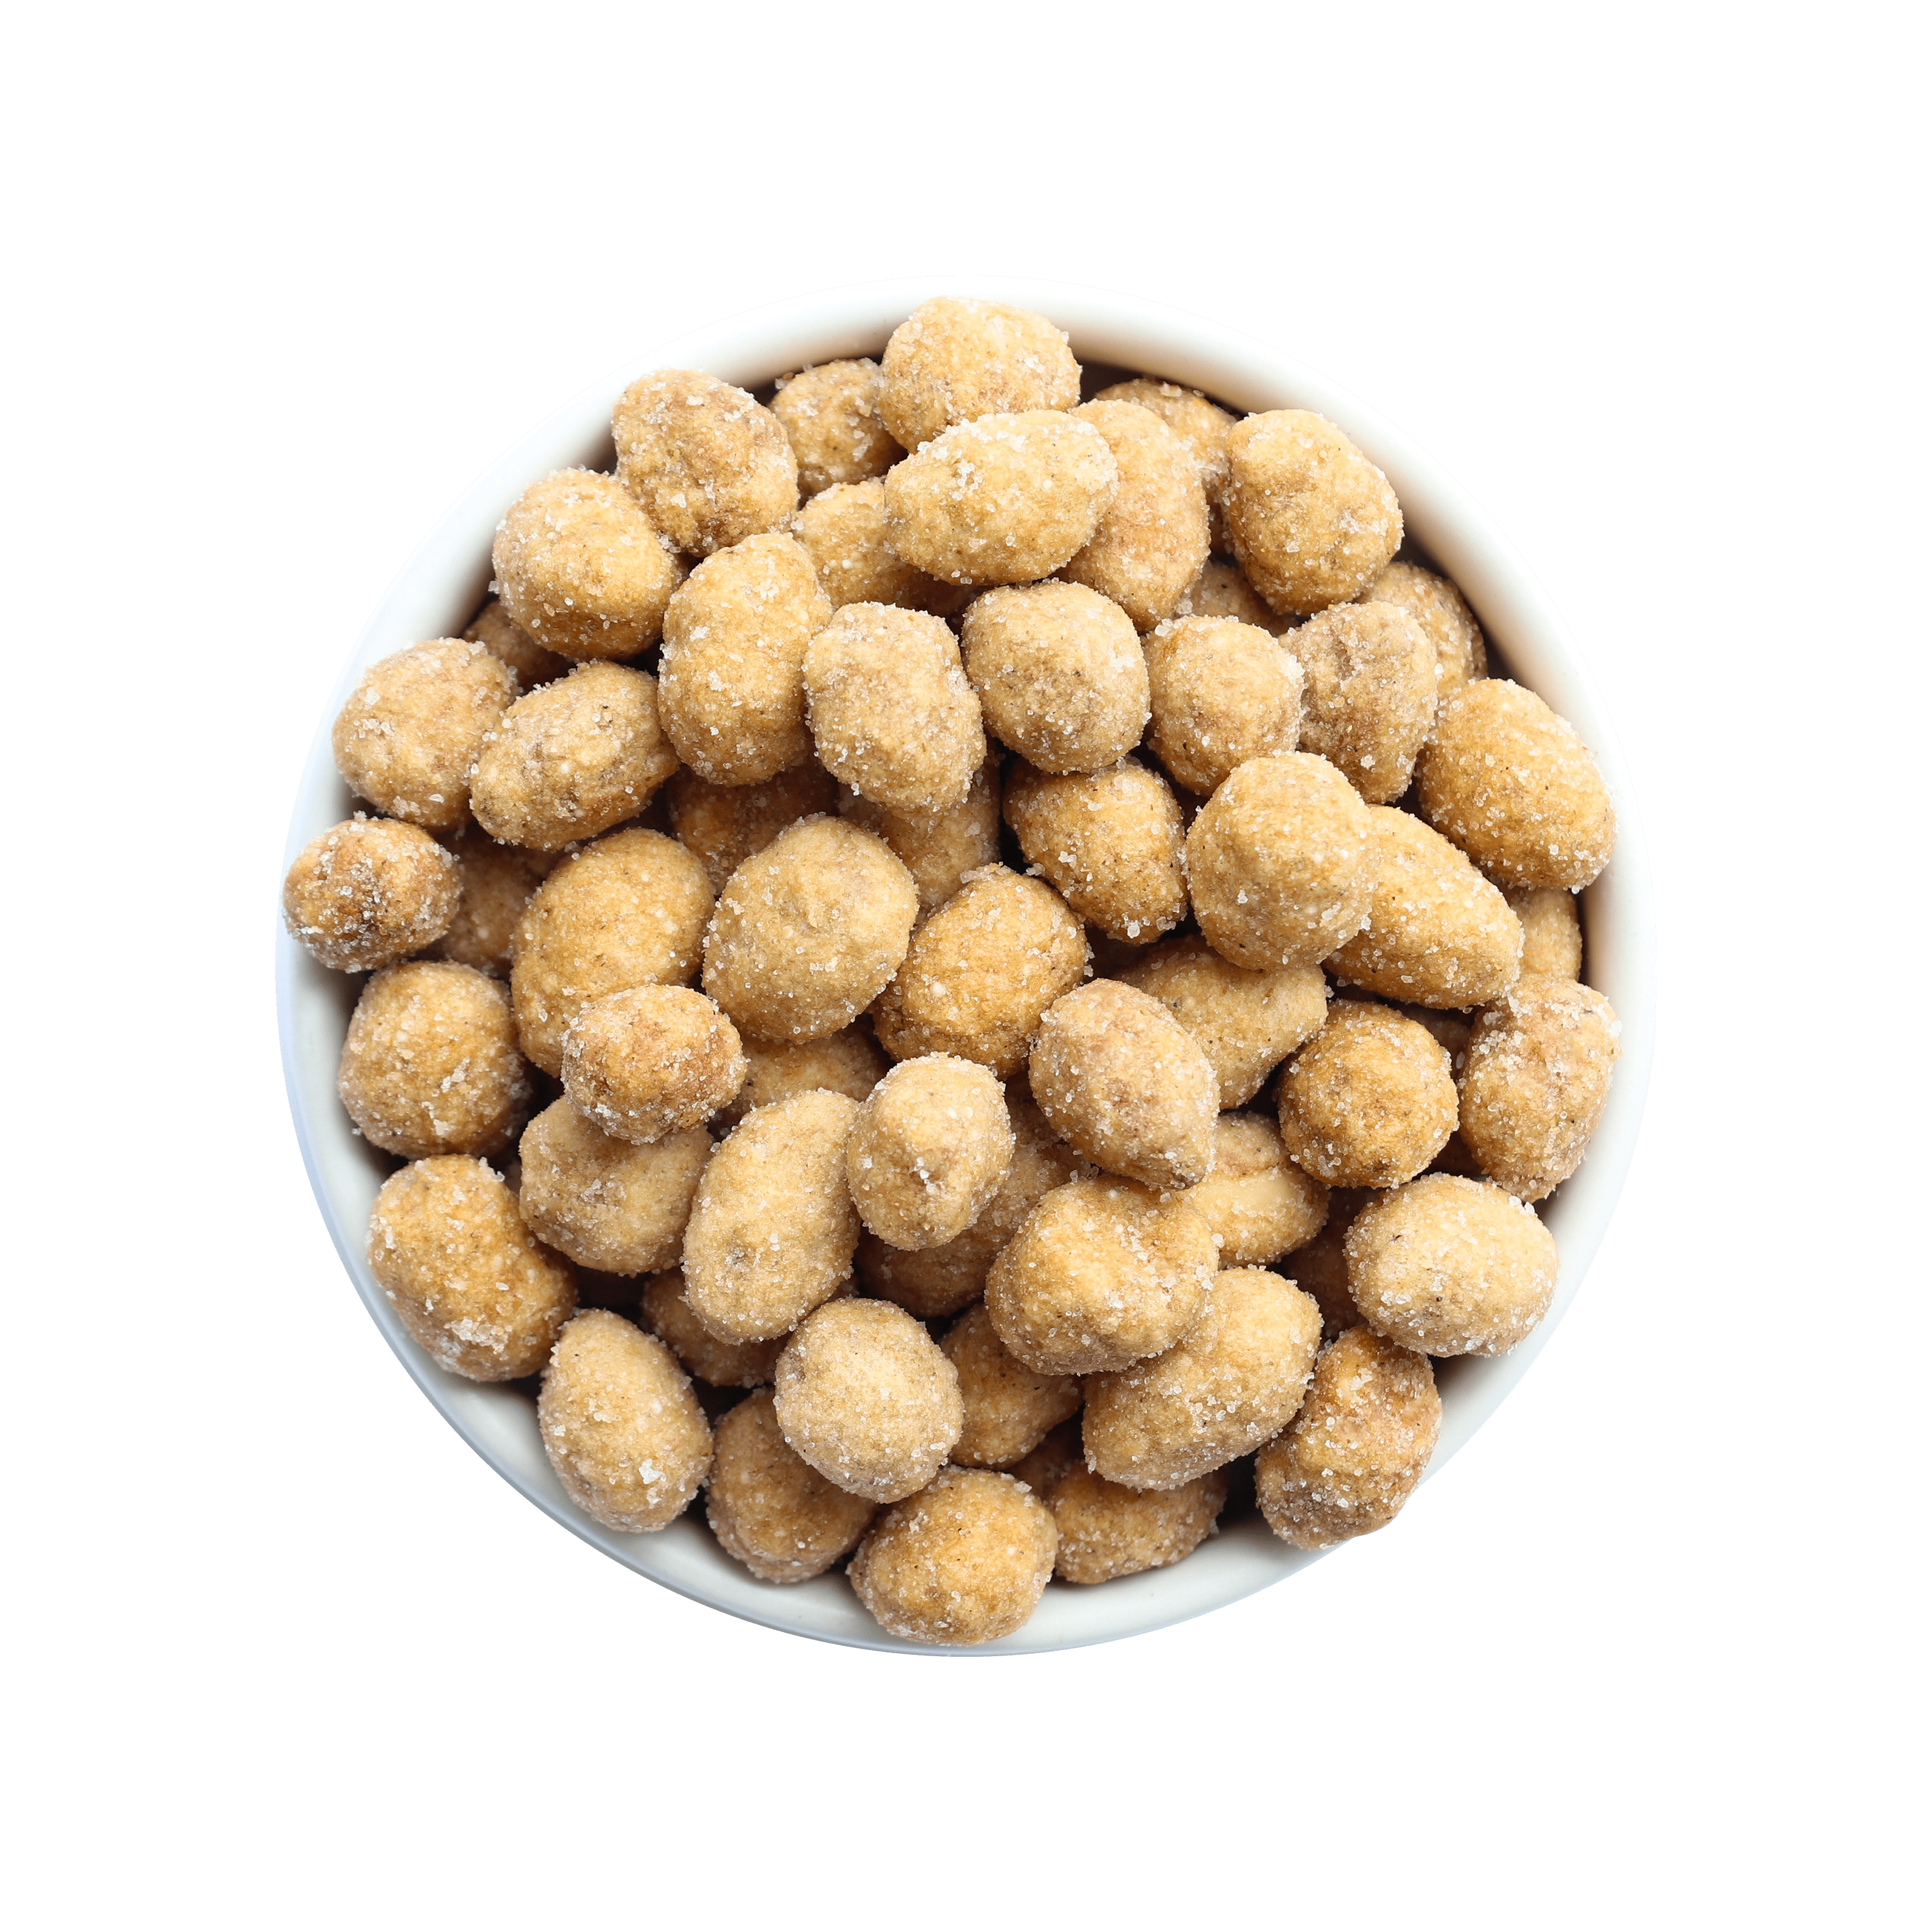 Amaranth Nuts - Limón & Sal del Himalaya